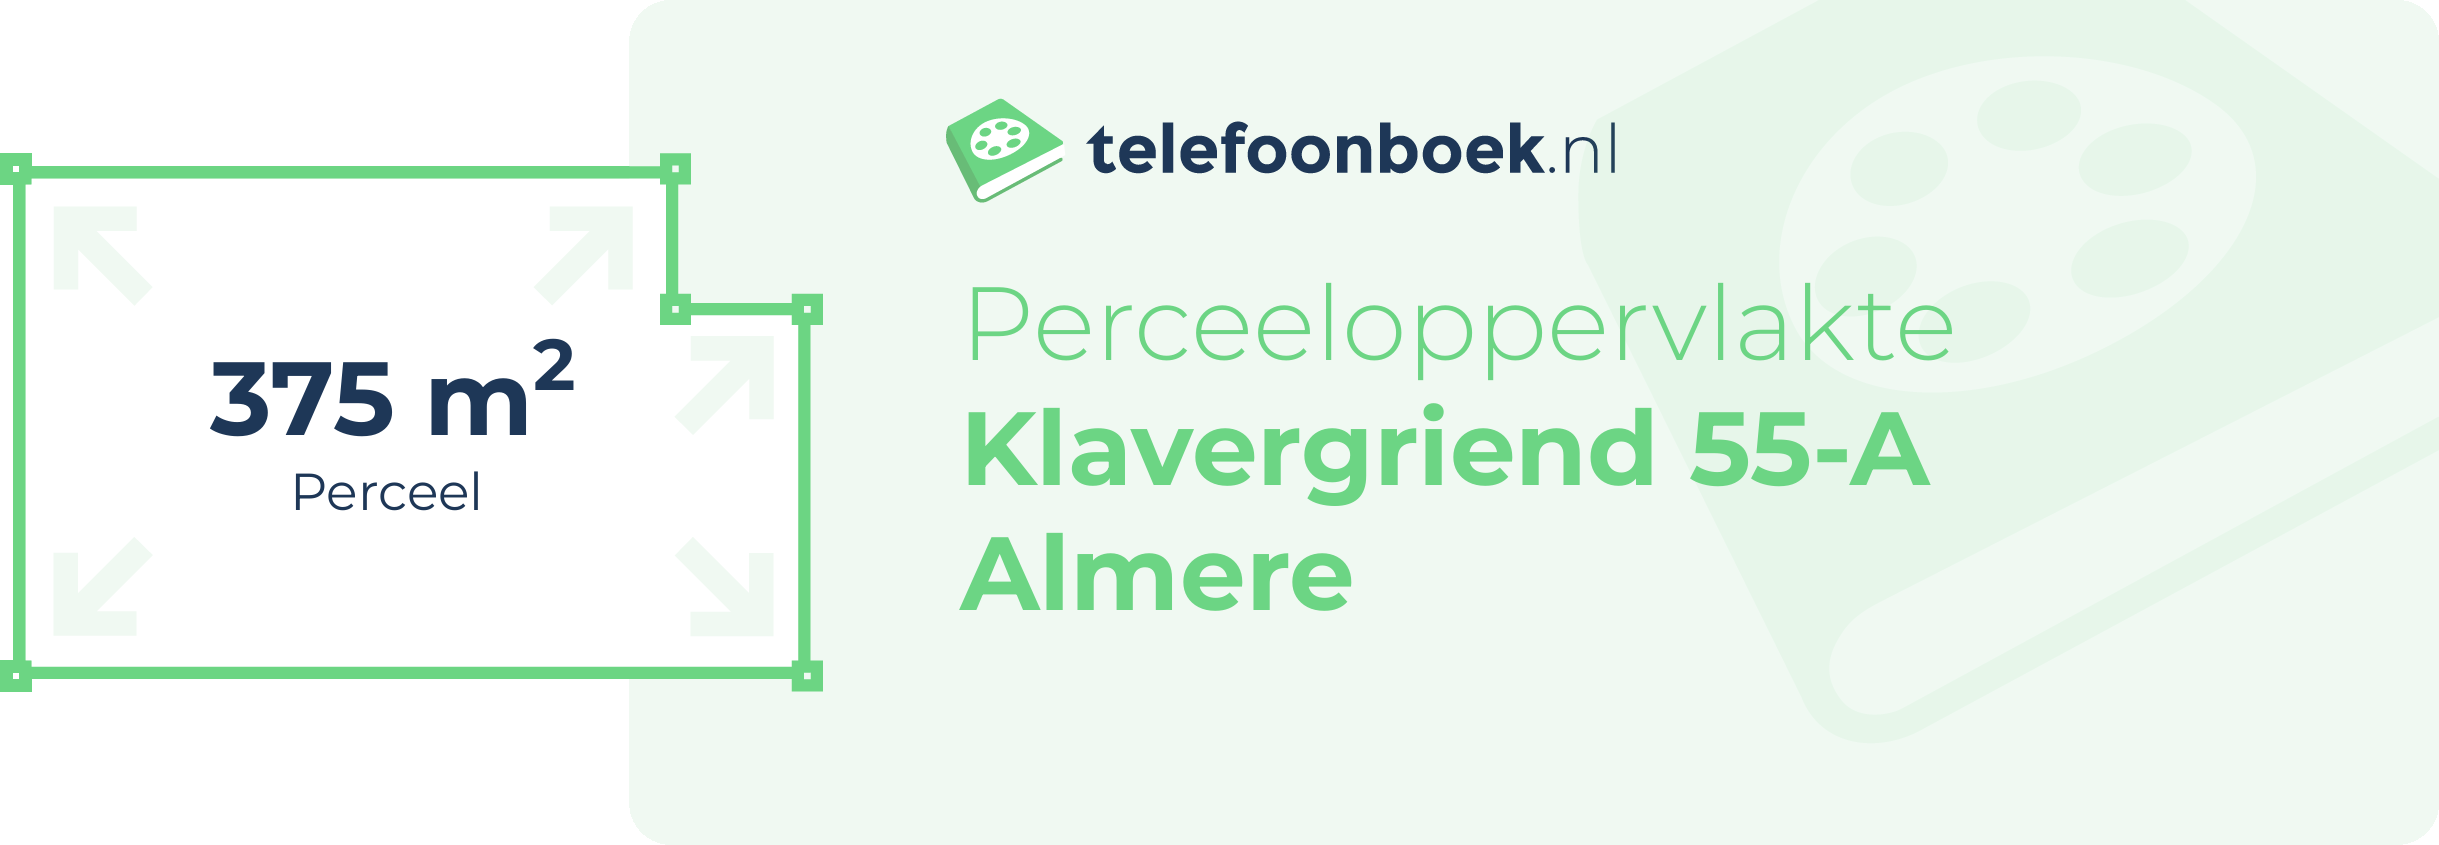 Perceeloppervlakte Klavergriend 55-A Almere